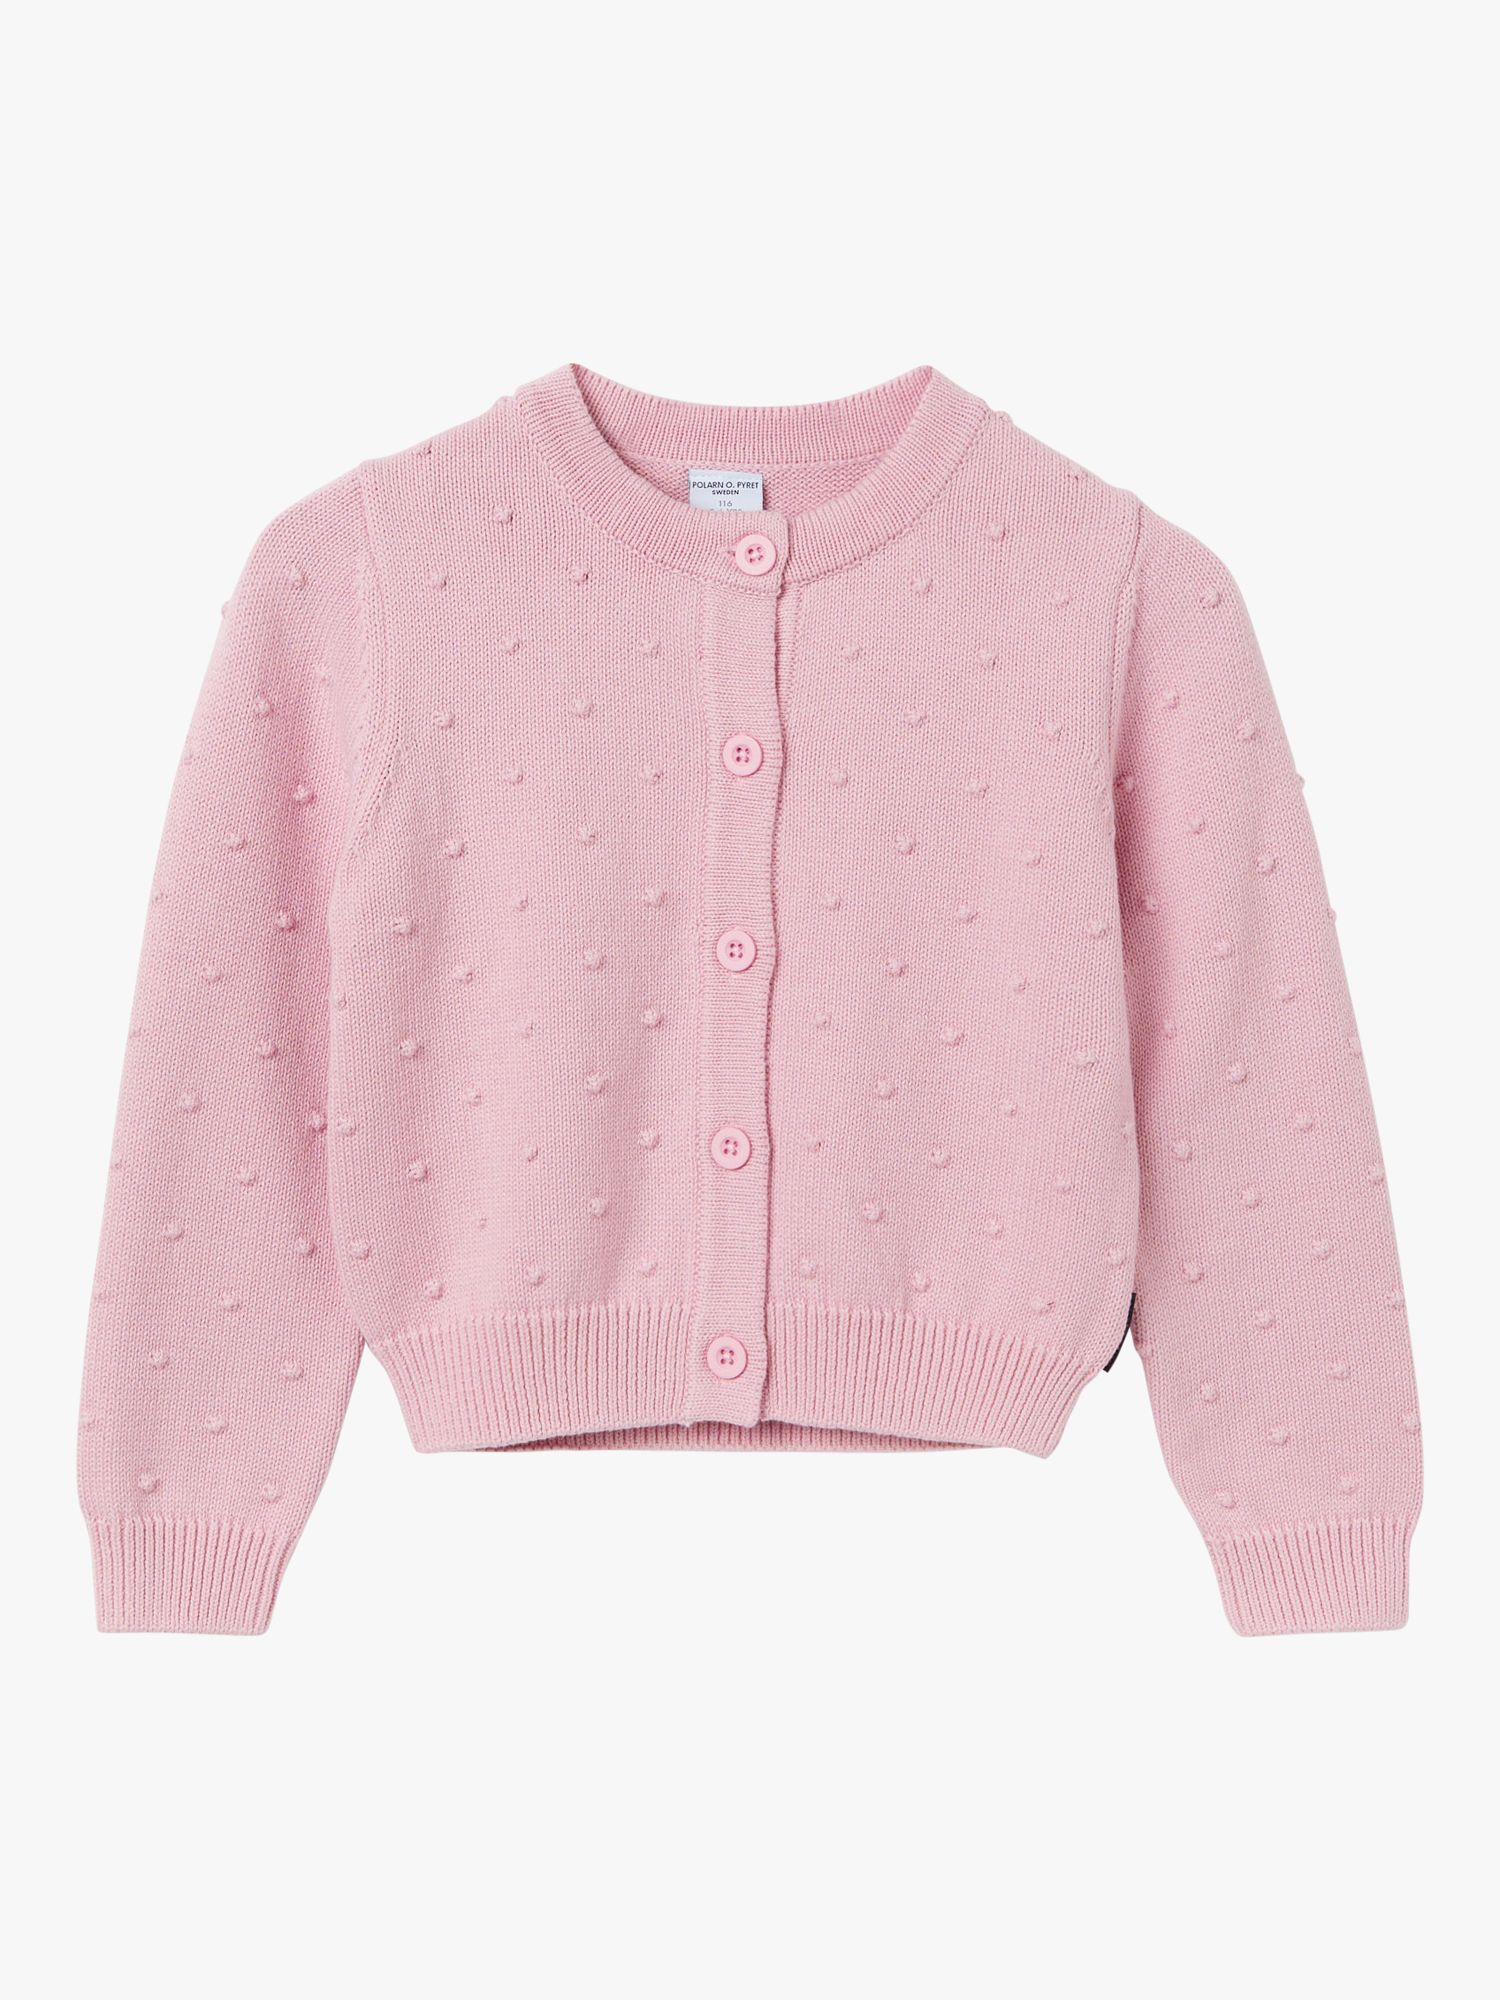 Polarn O. Pyret Kids' Organic Cotton Knit Bobble Detail Cardigan, Pink, 12-18 months